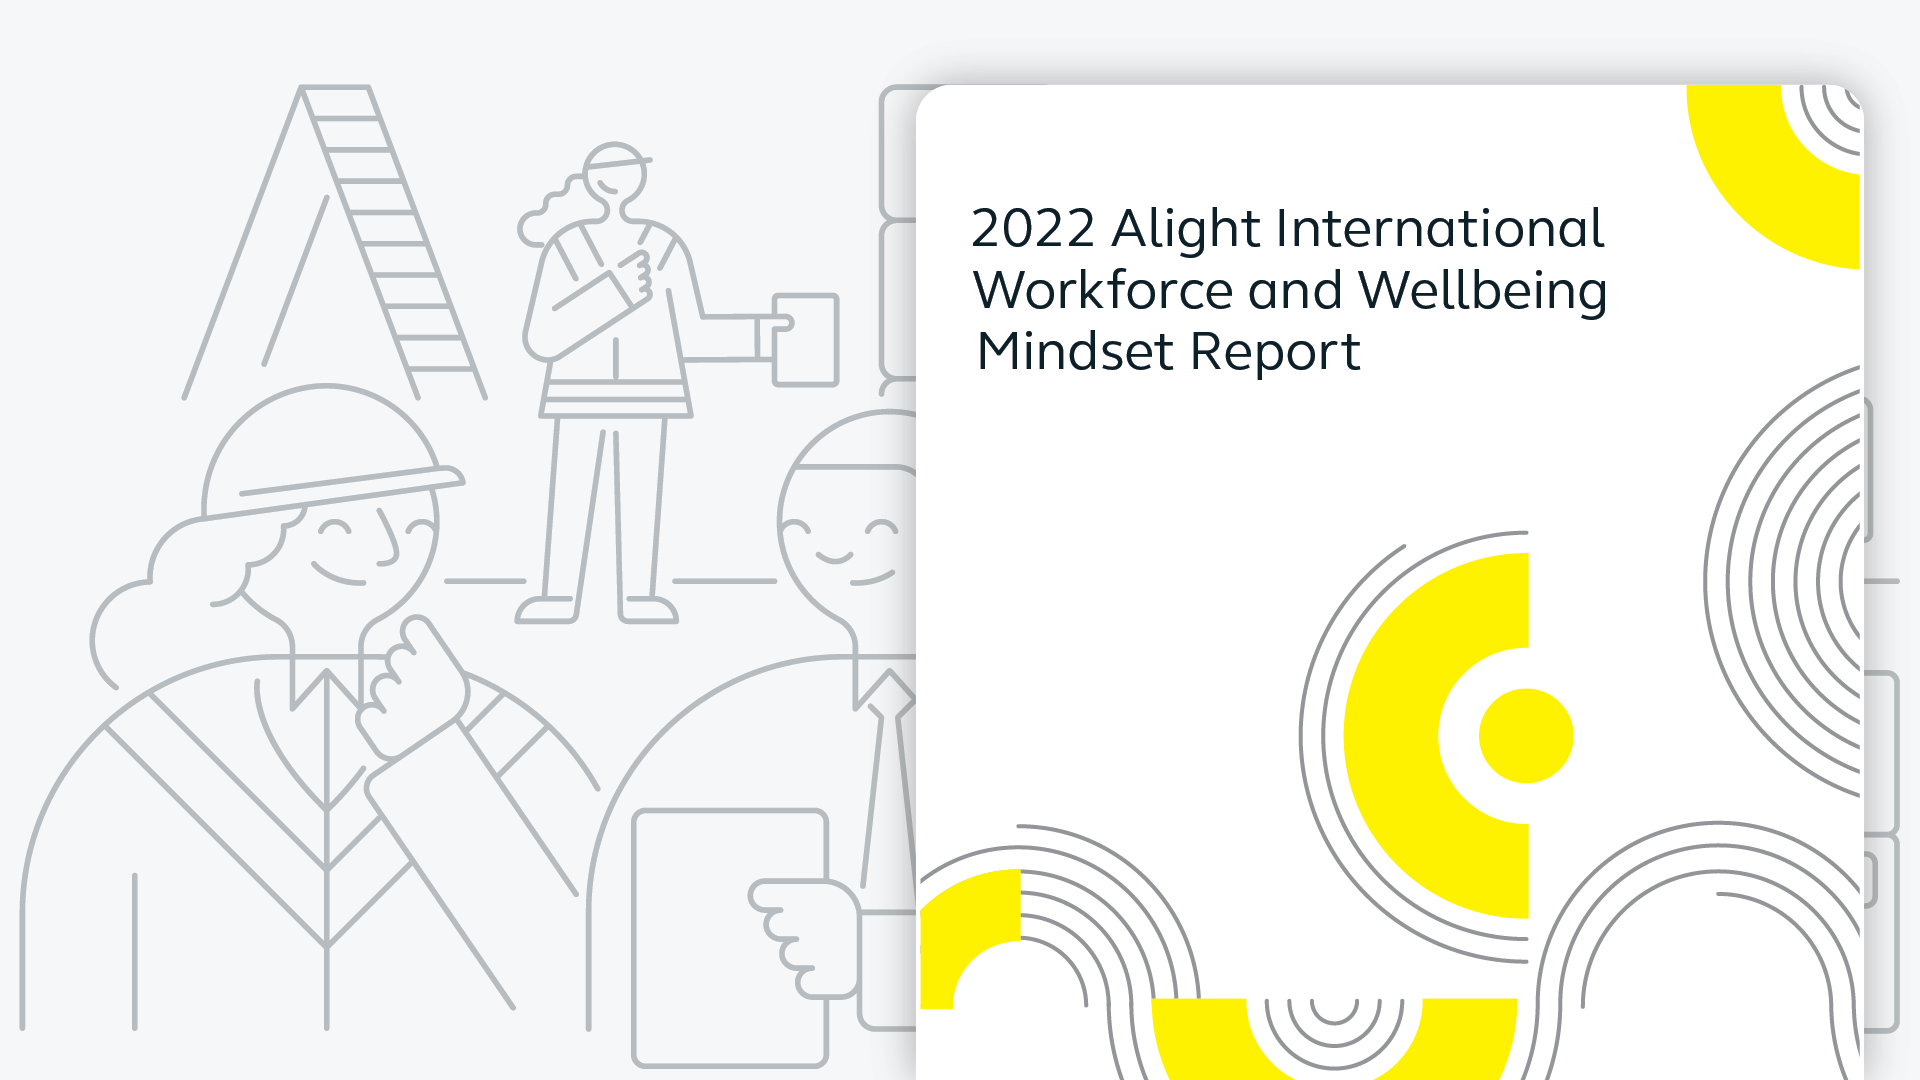 2022 Alight international workforce and wellbeing mindset report